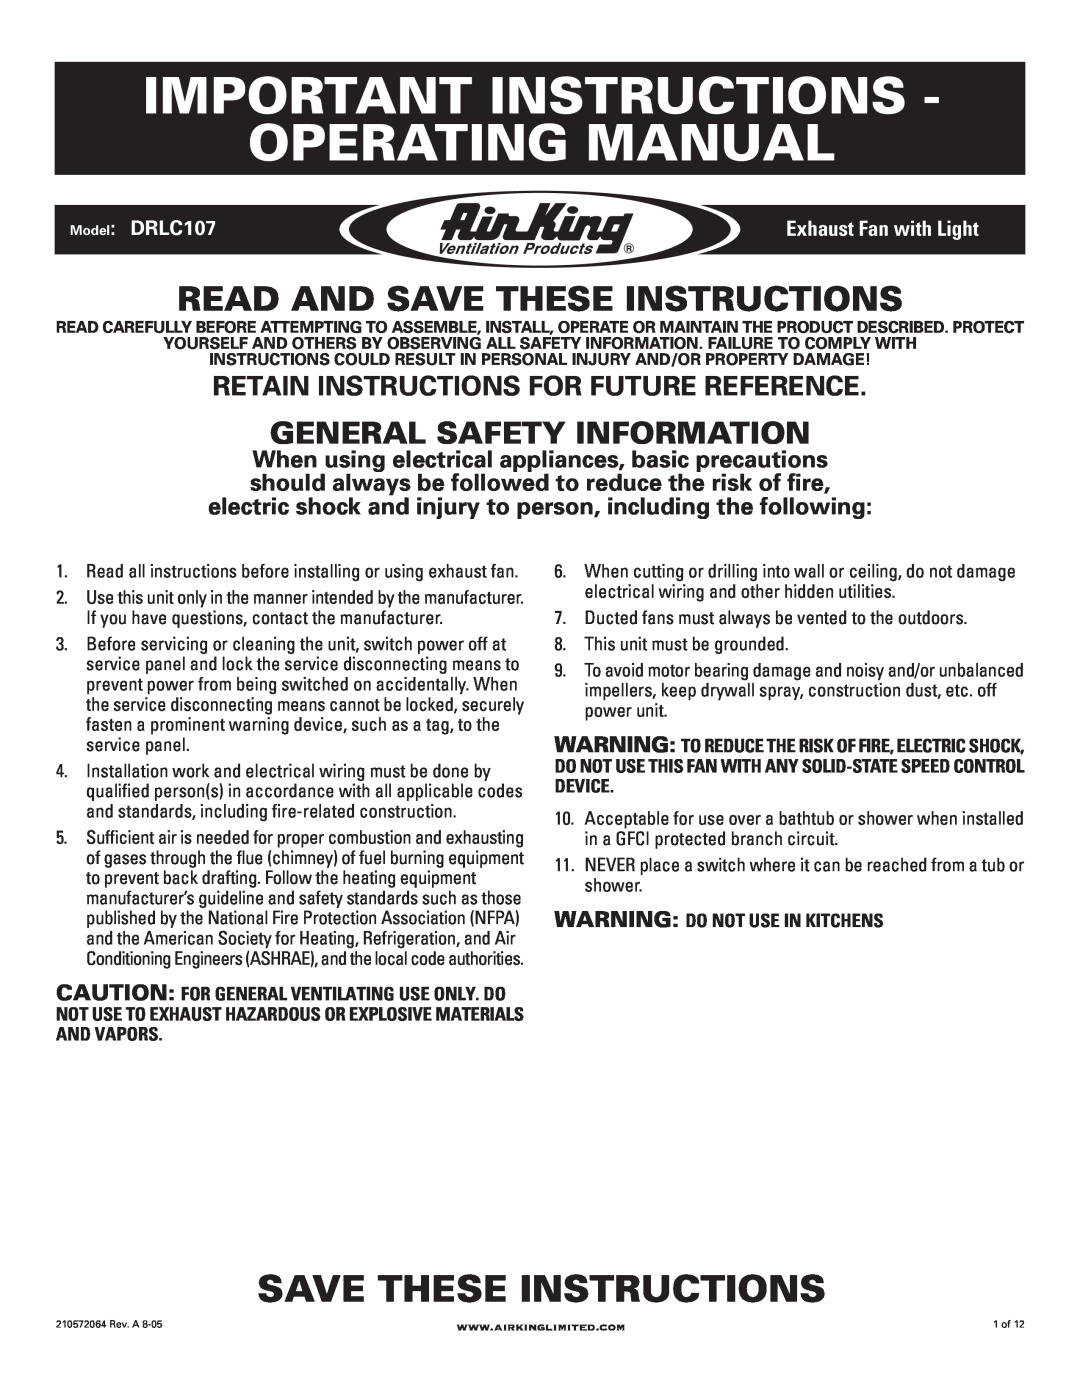 Air King manual Important Instructions Operating Manual, Read And Save These Instructions, Model DRLC107 